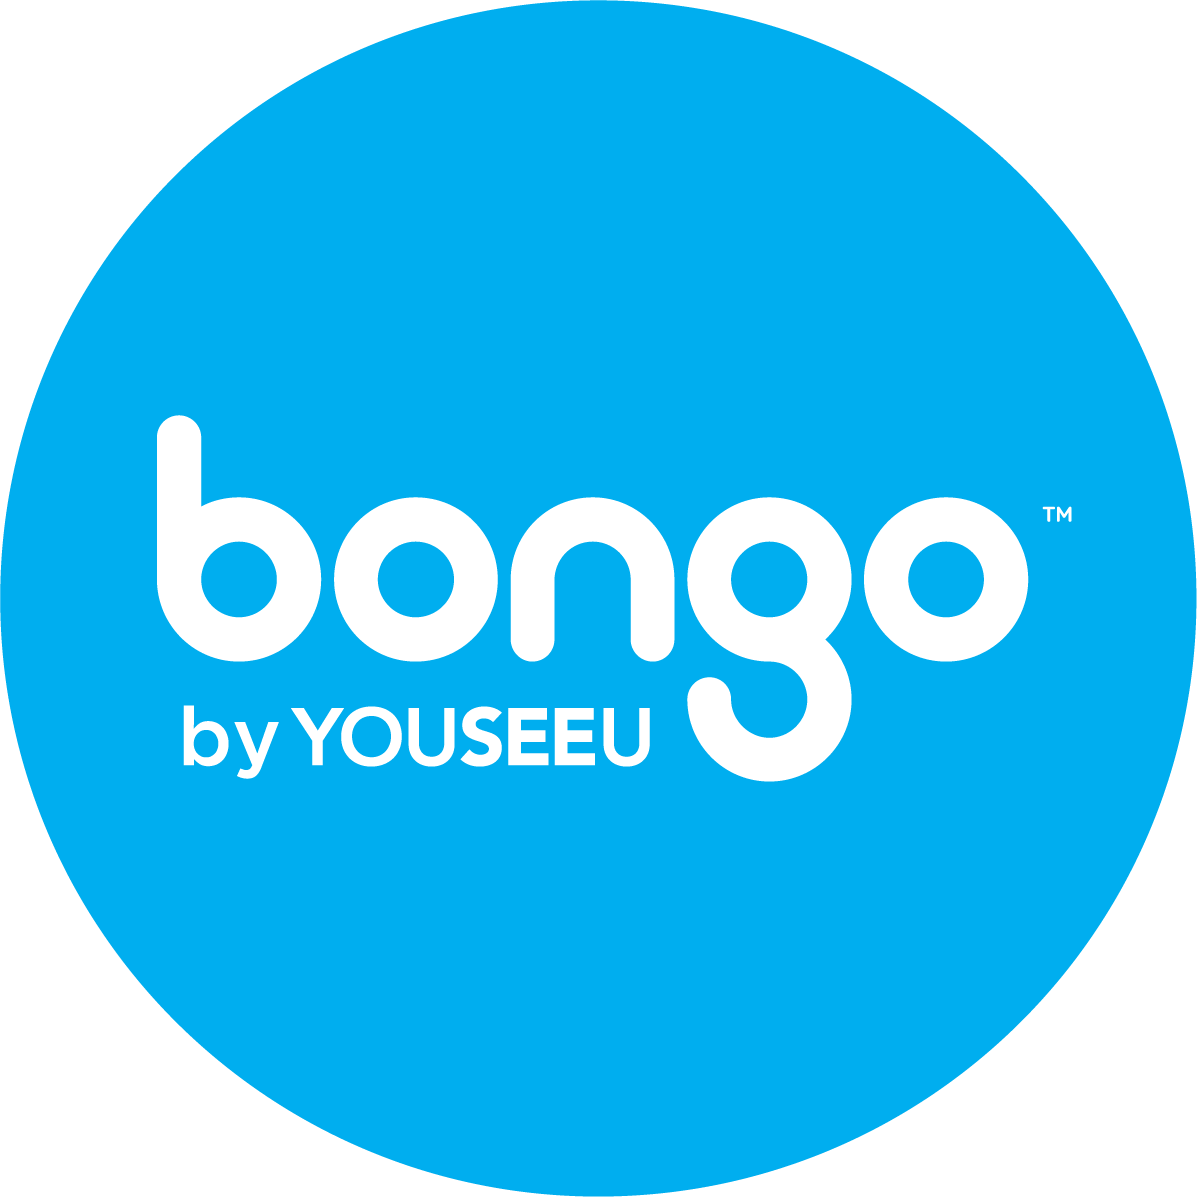 YouSeeU's flagship product, Bongo, is a video assessment platform.